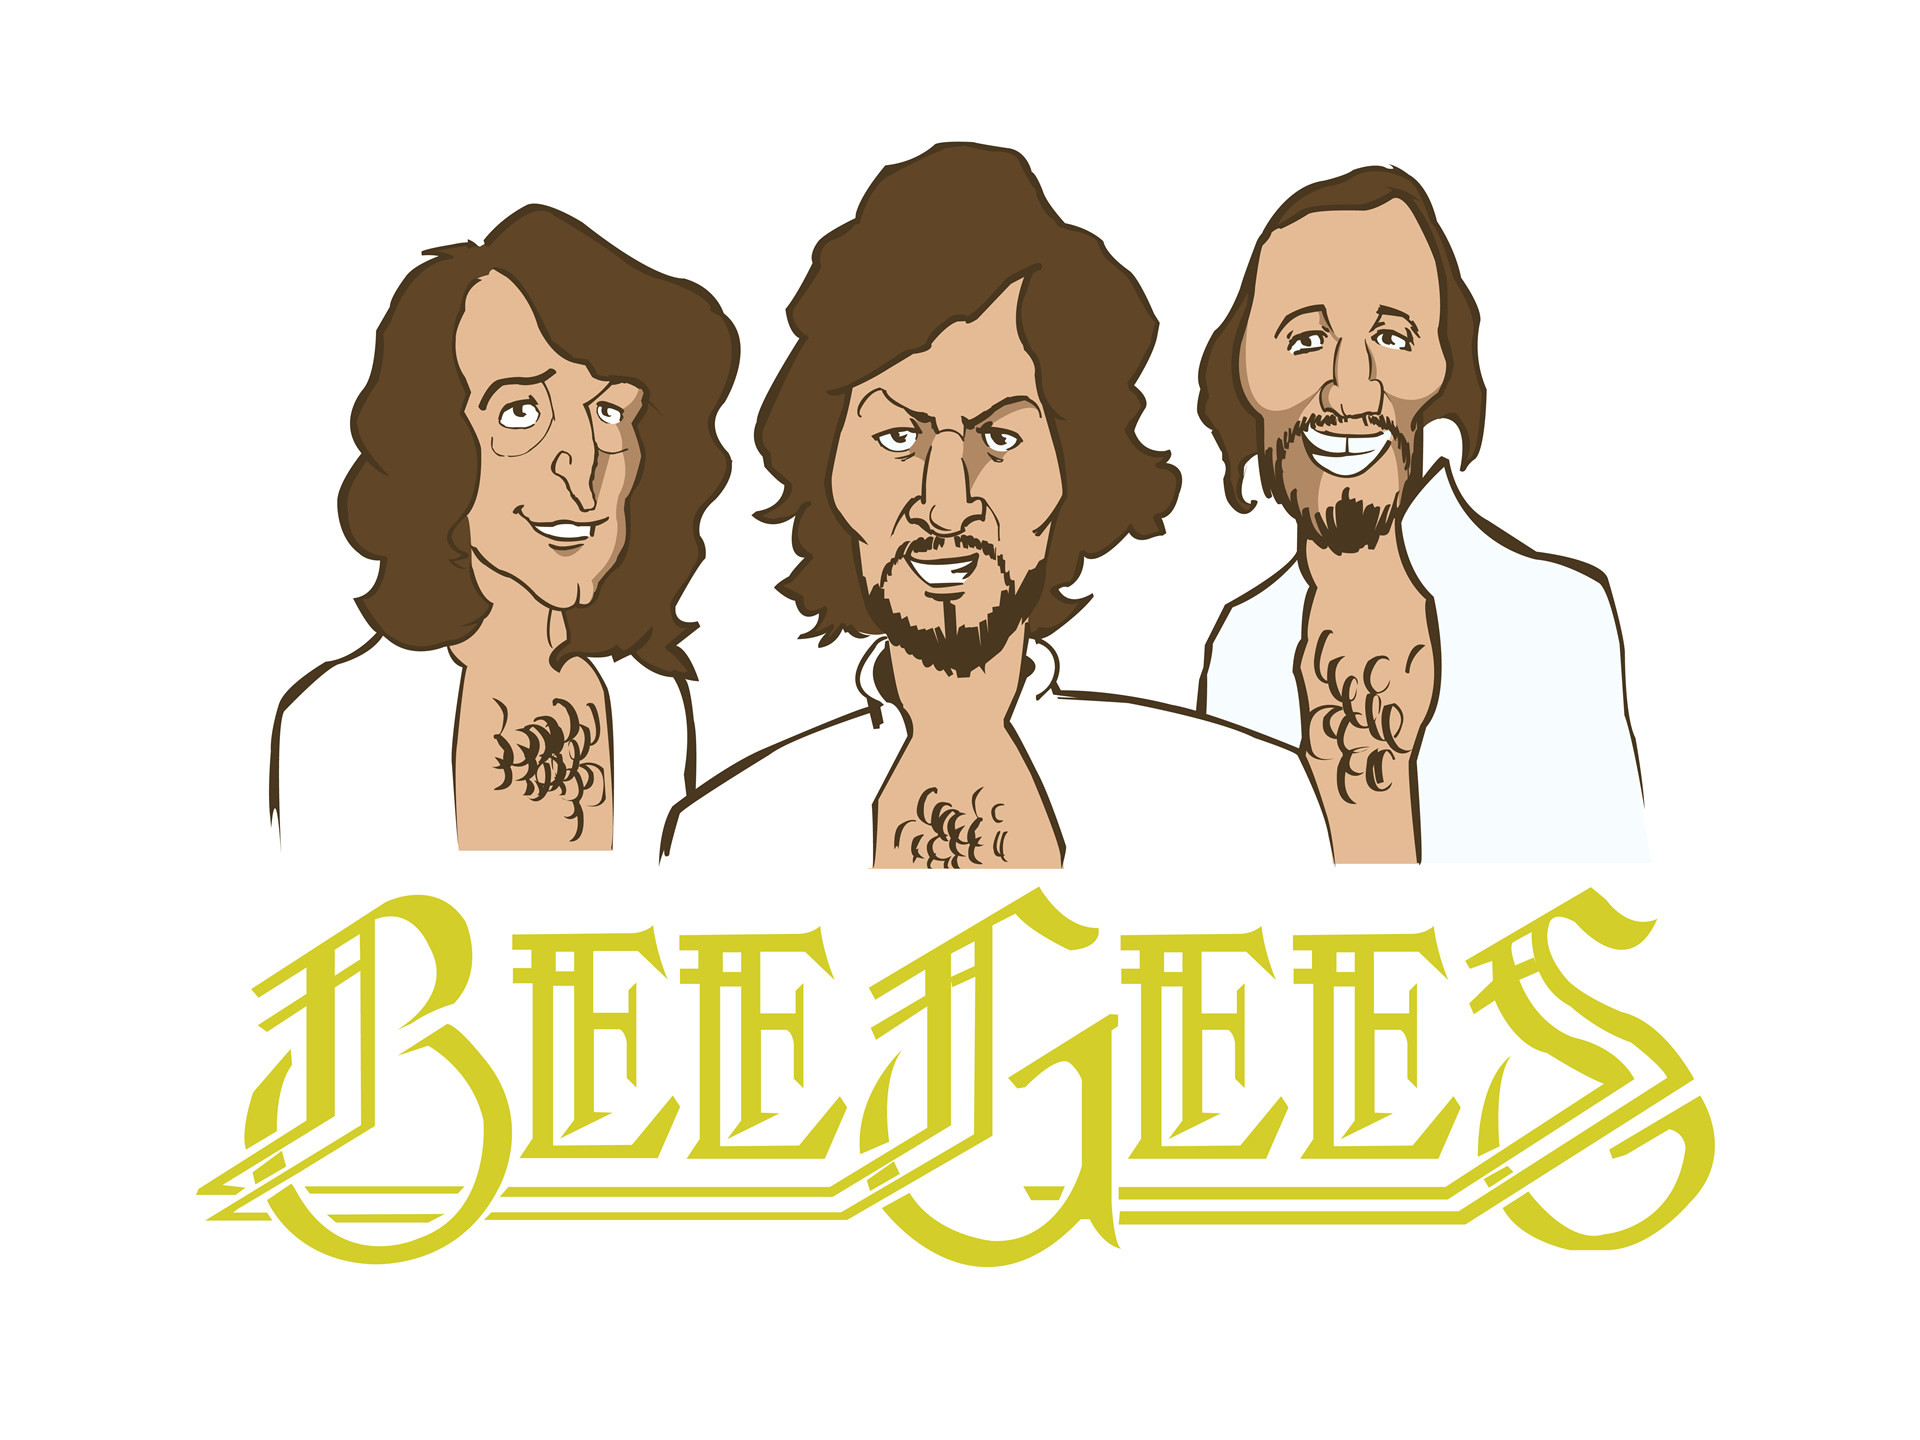 Bee Gees Wallpaper